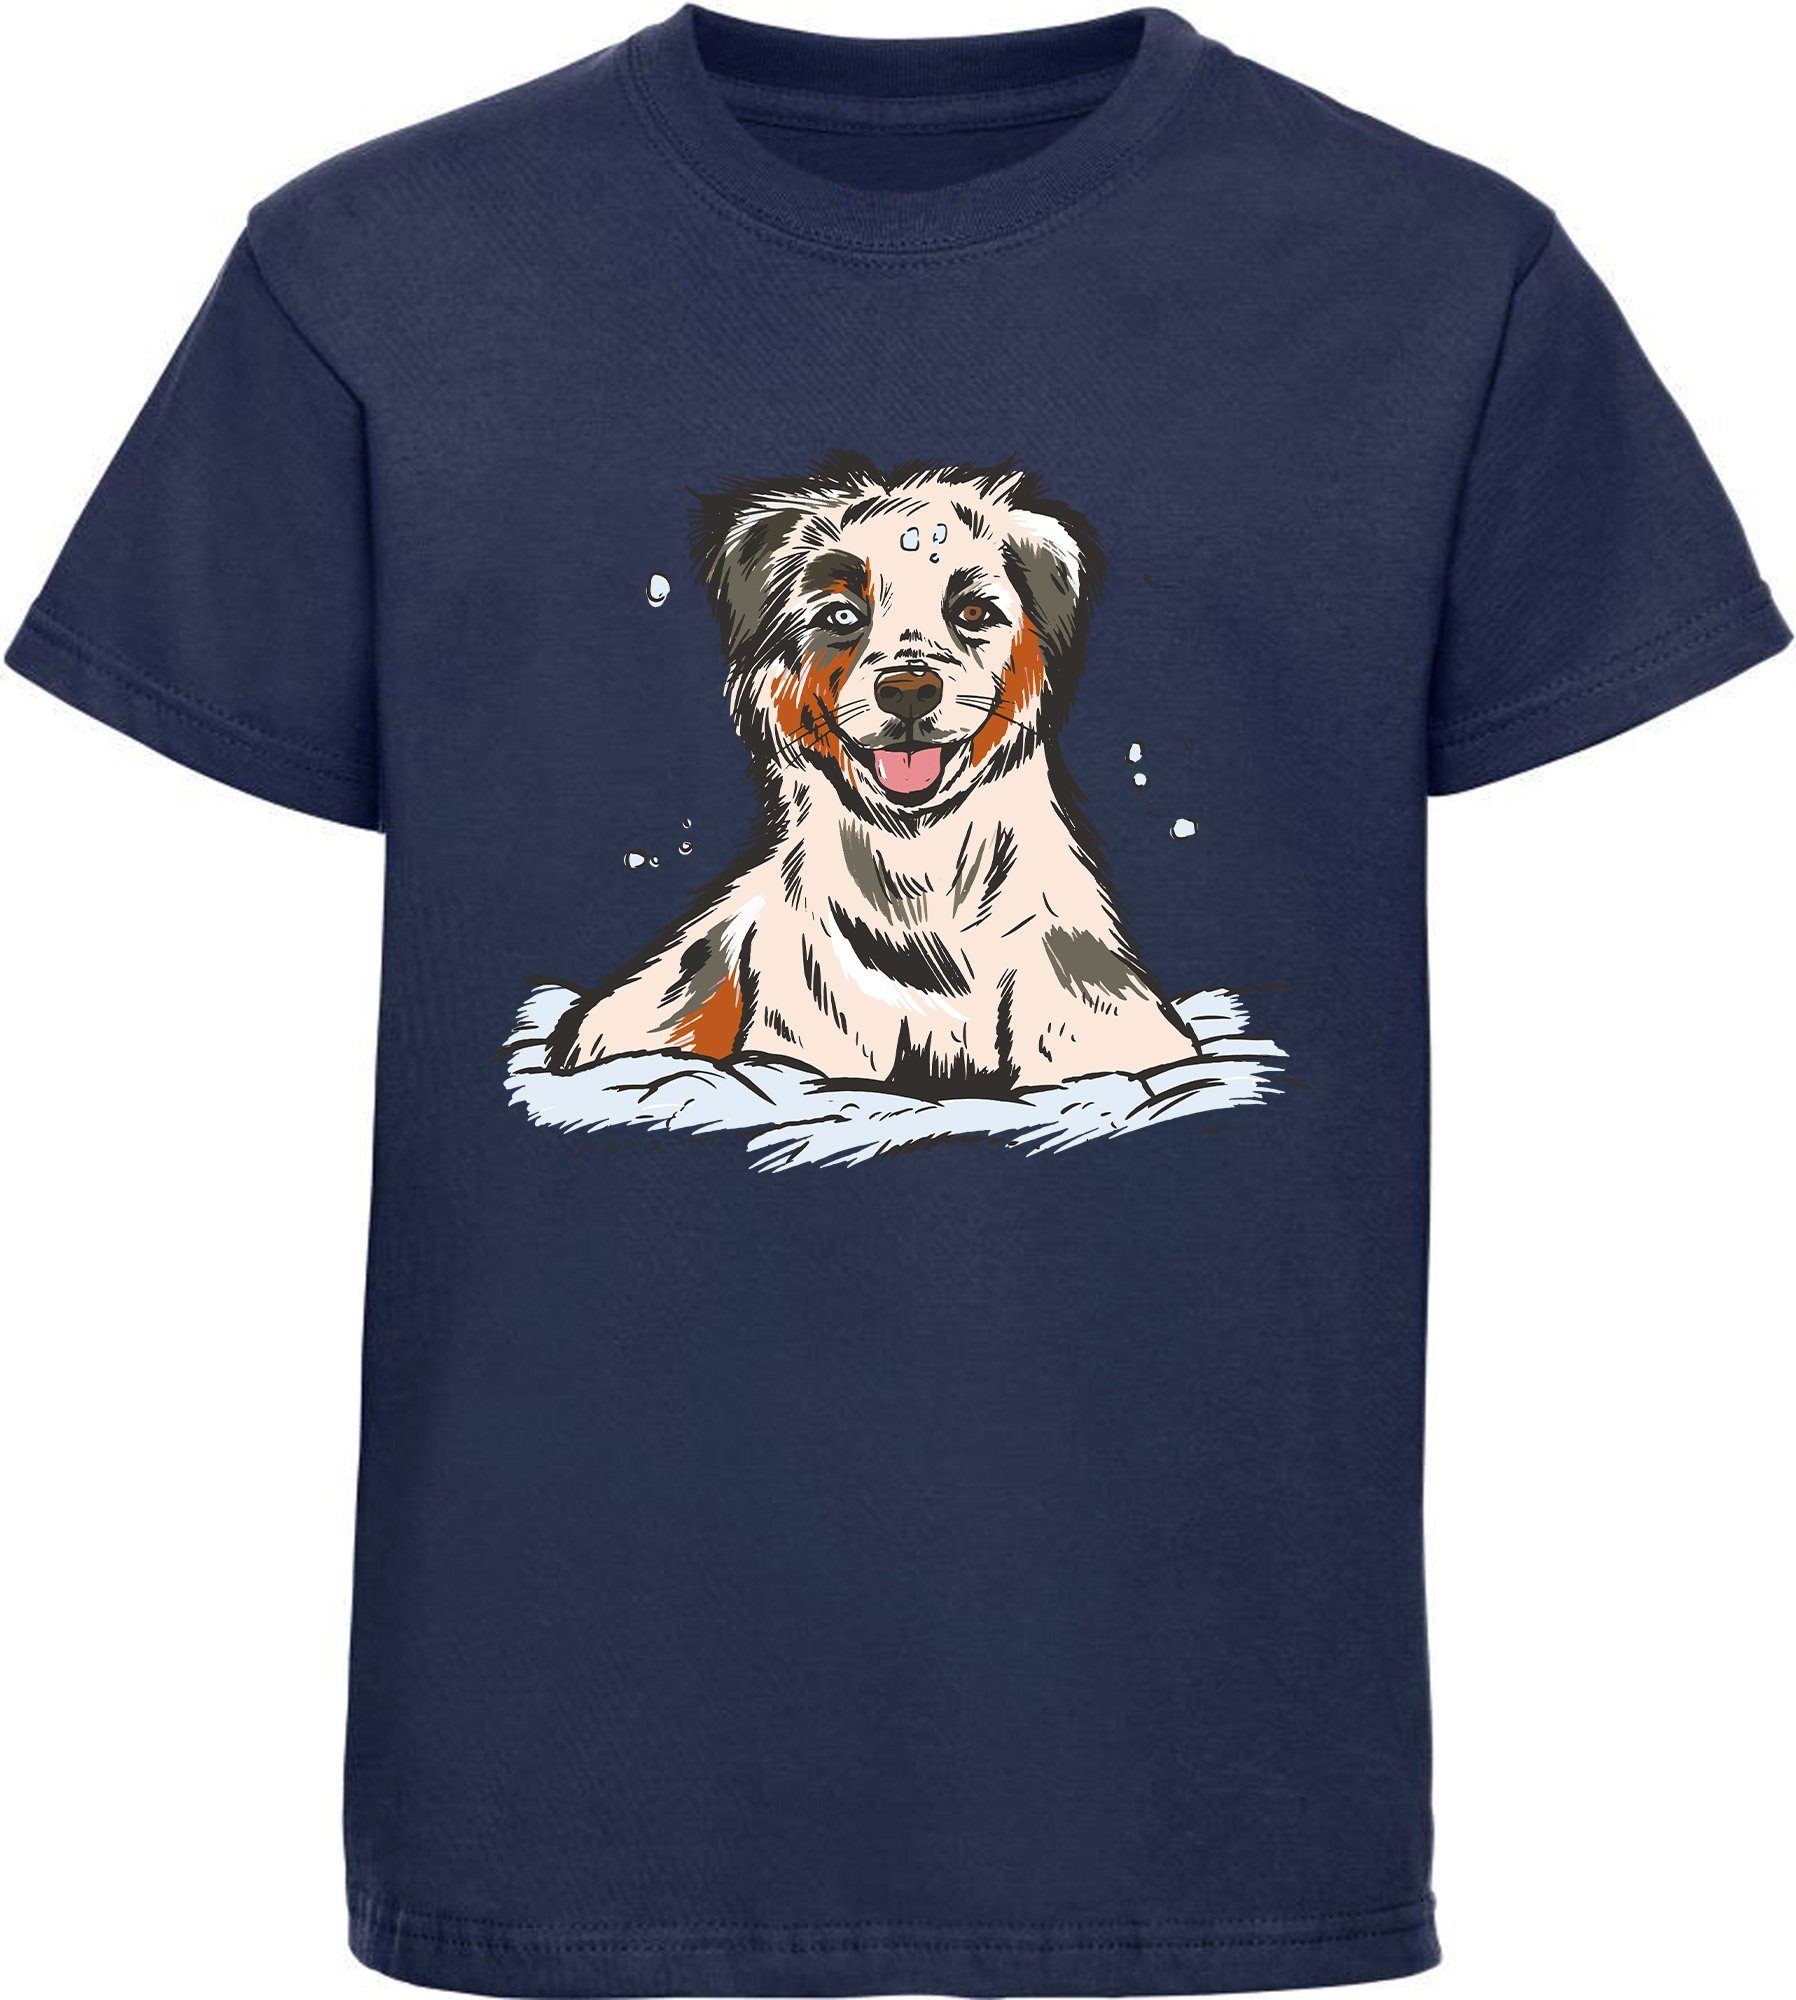 Print-Shirt Shepherd i216 MyDesign24 Baumwollshirt Welpe und blau Jugend bedrucktes mit navy Australian Aufdruck, Hunde T-Shirt Kinder